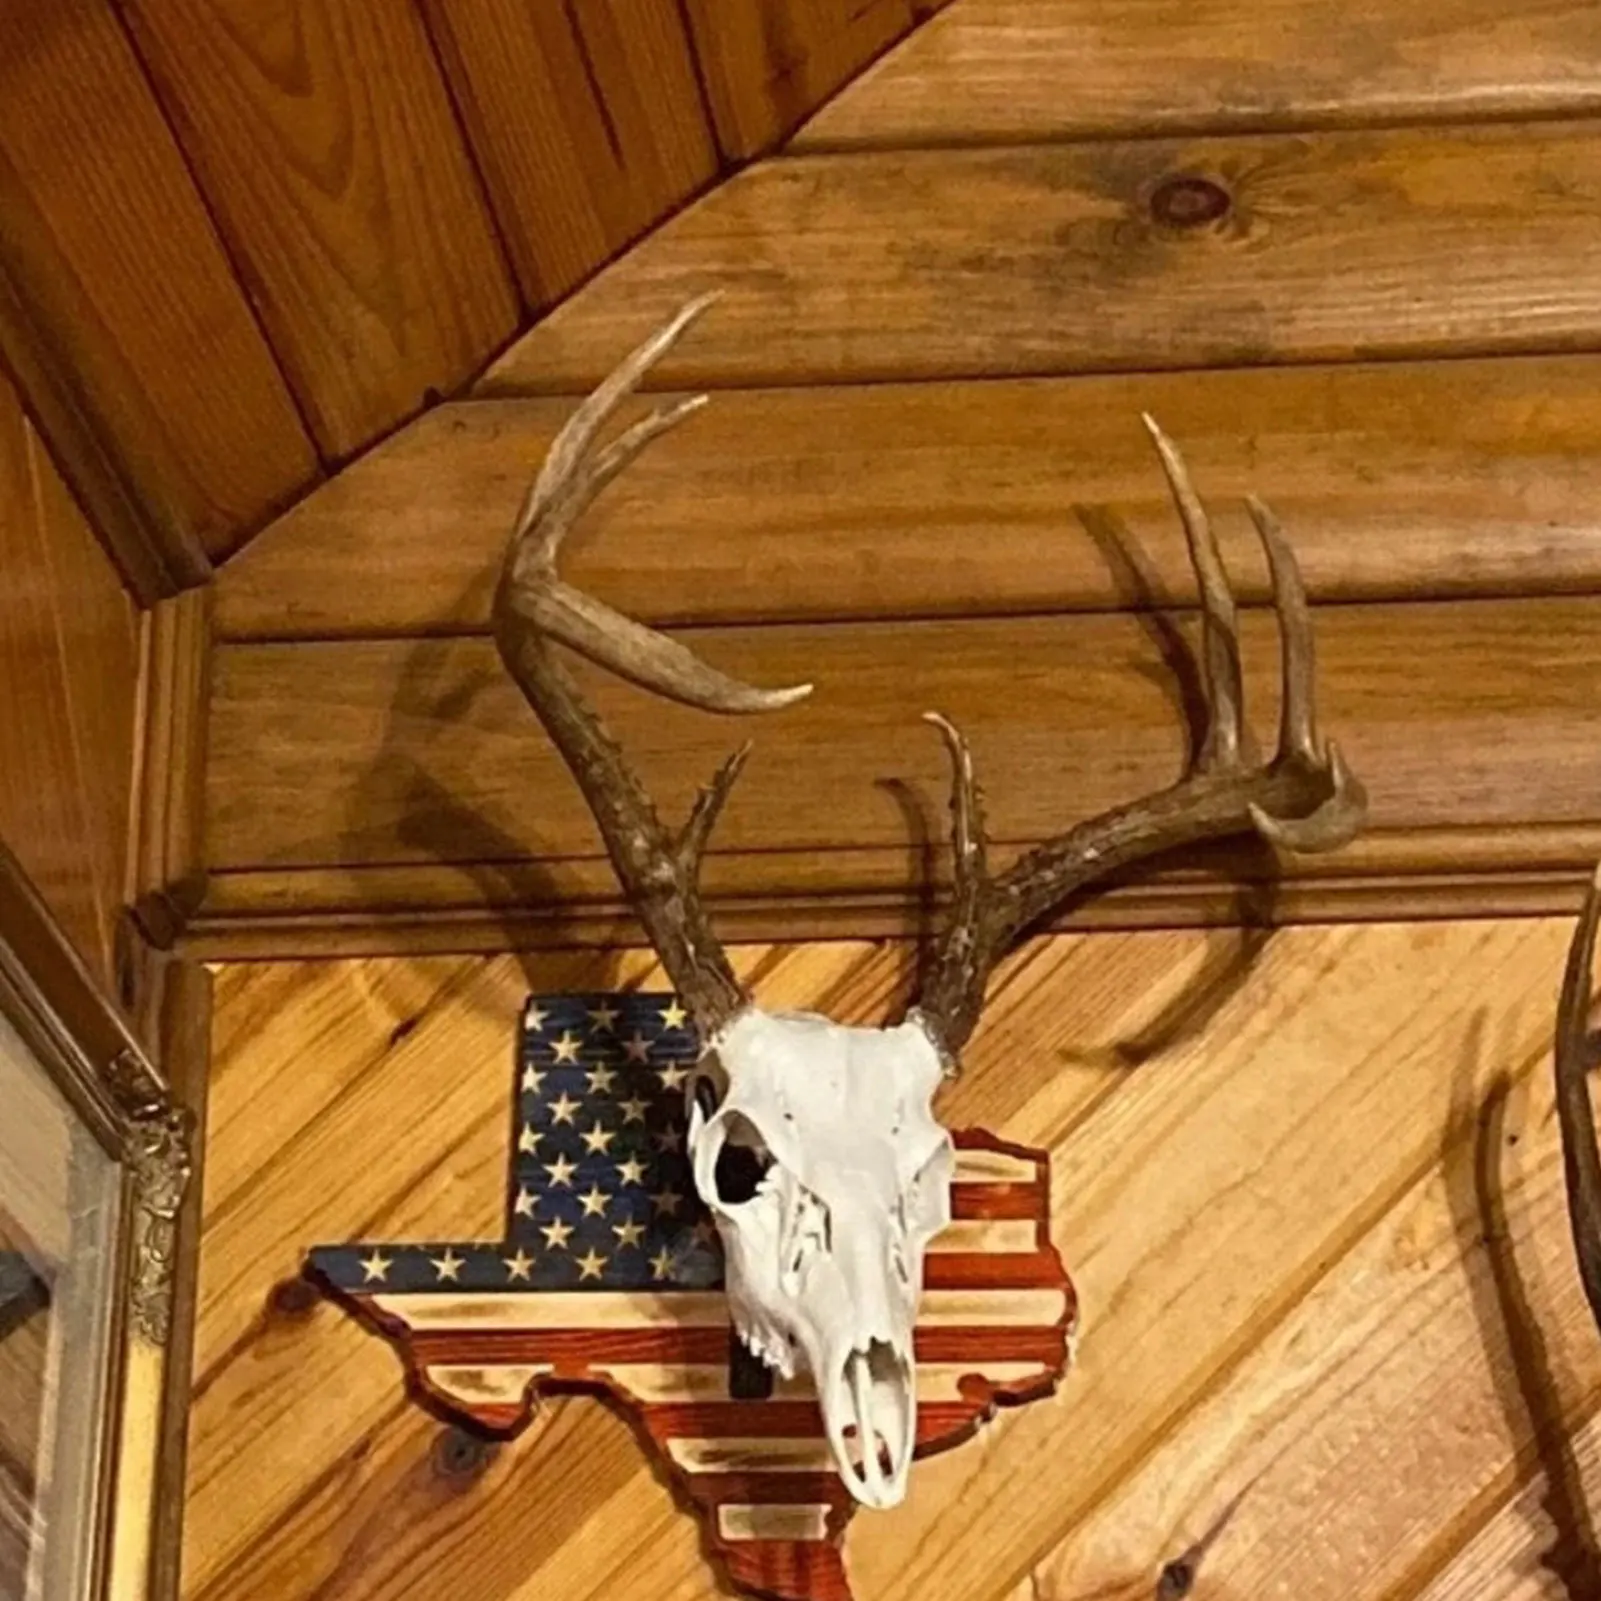 Perfect Kit for Hanging and Mounting Antlers Skulls Wood Skull Display & Mount Kit for Wall or Table Display European Deer Mount Plaque Skull Hooker USA Flag Decor Pedestal 